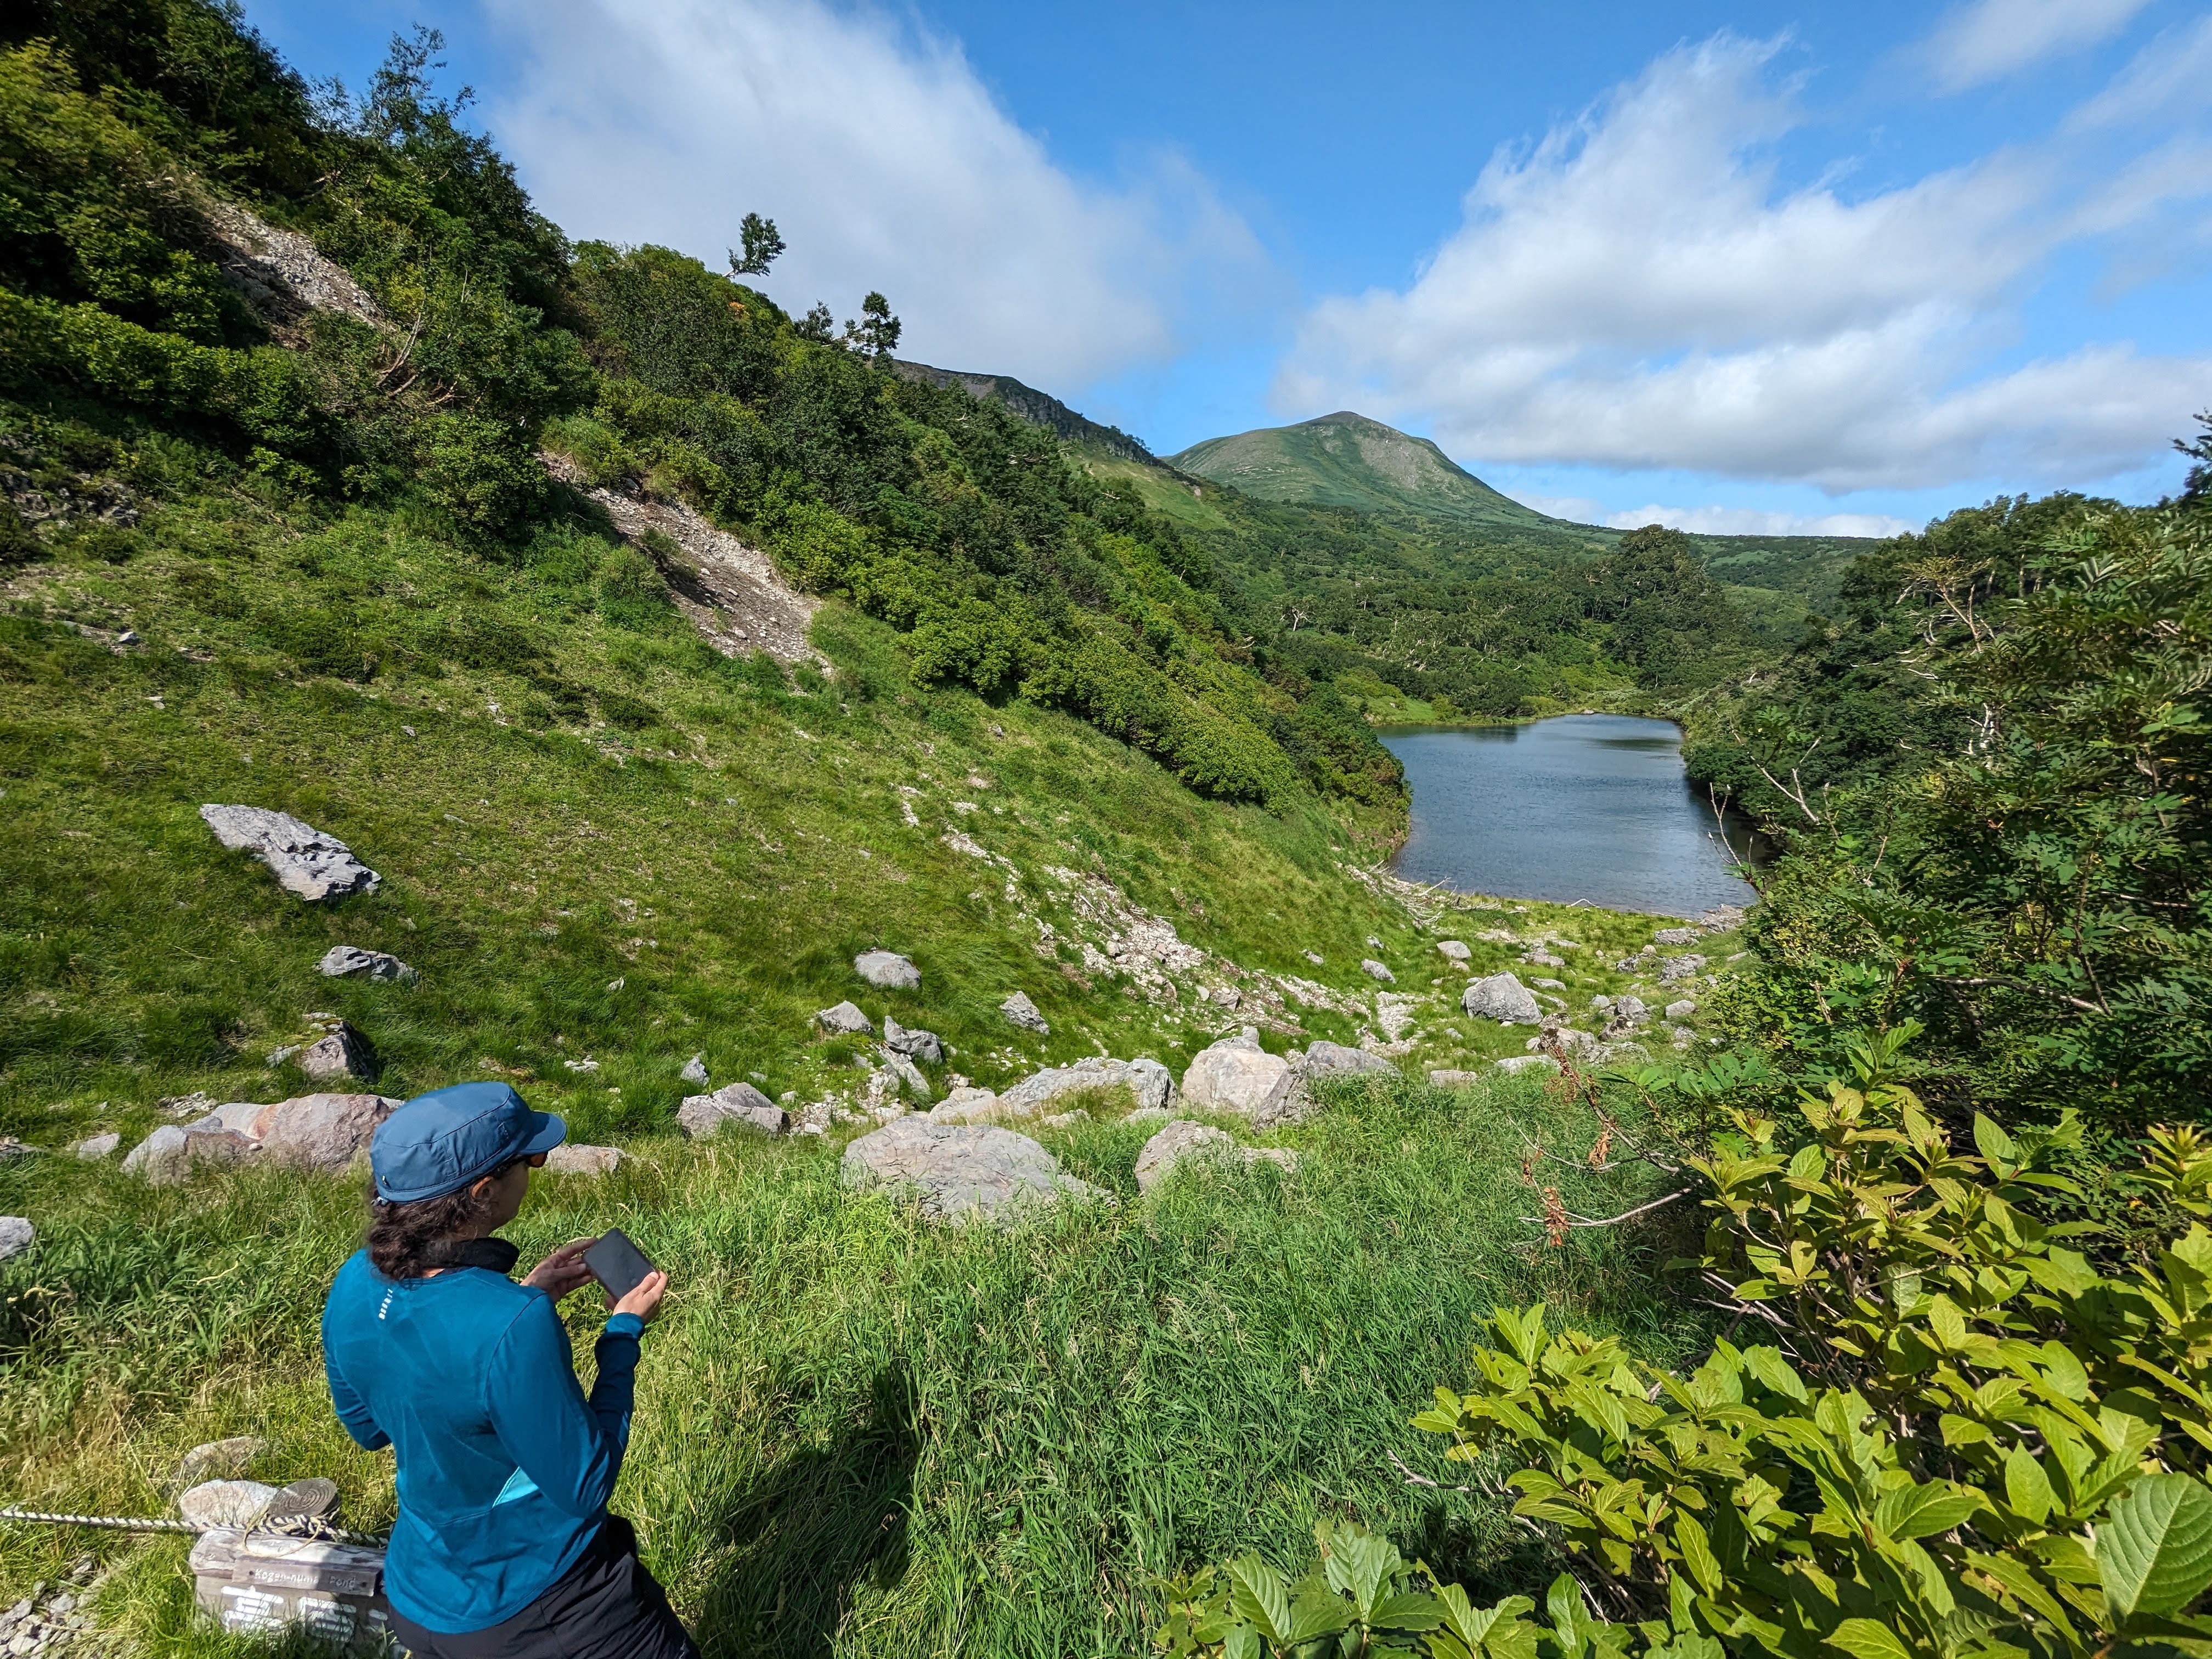 A hiker admires the view of a pond at Kogen Numa.